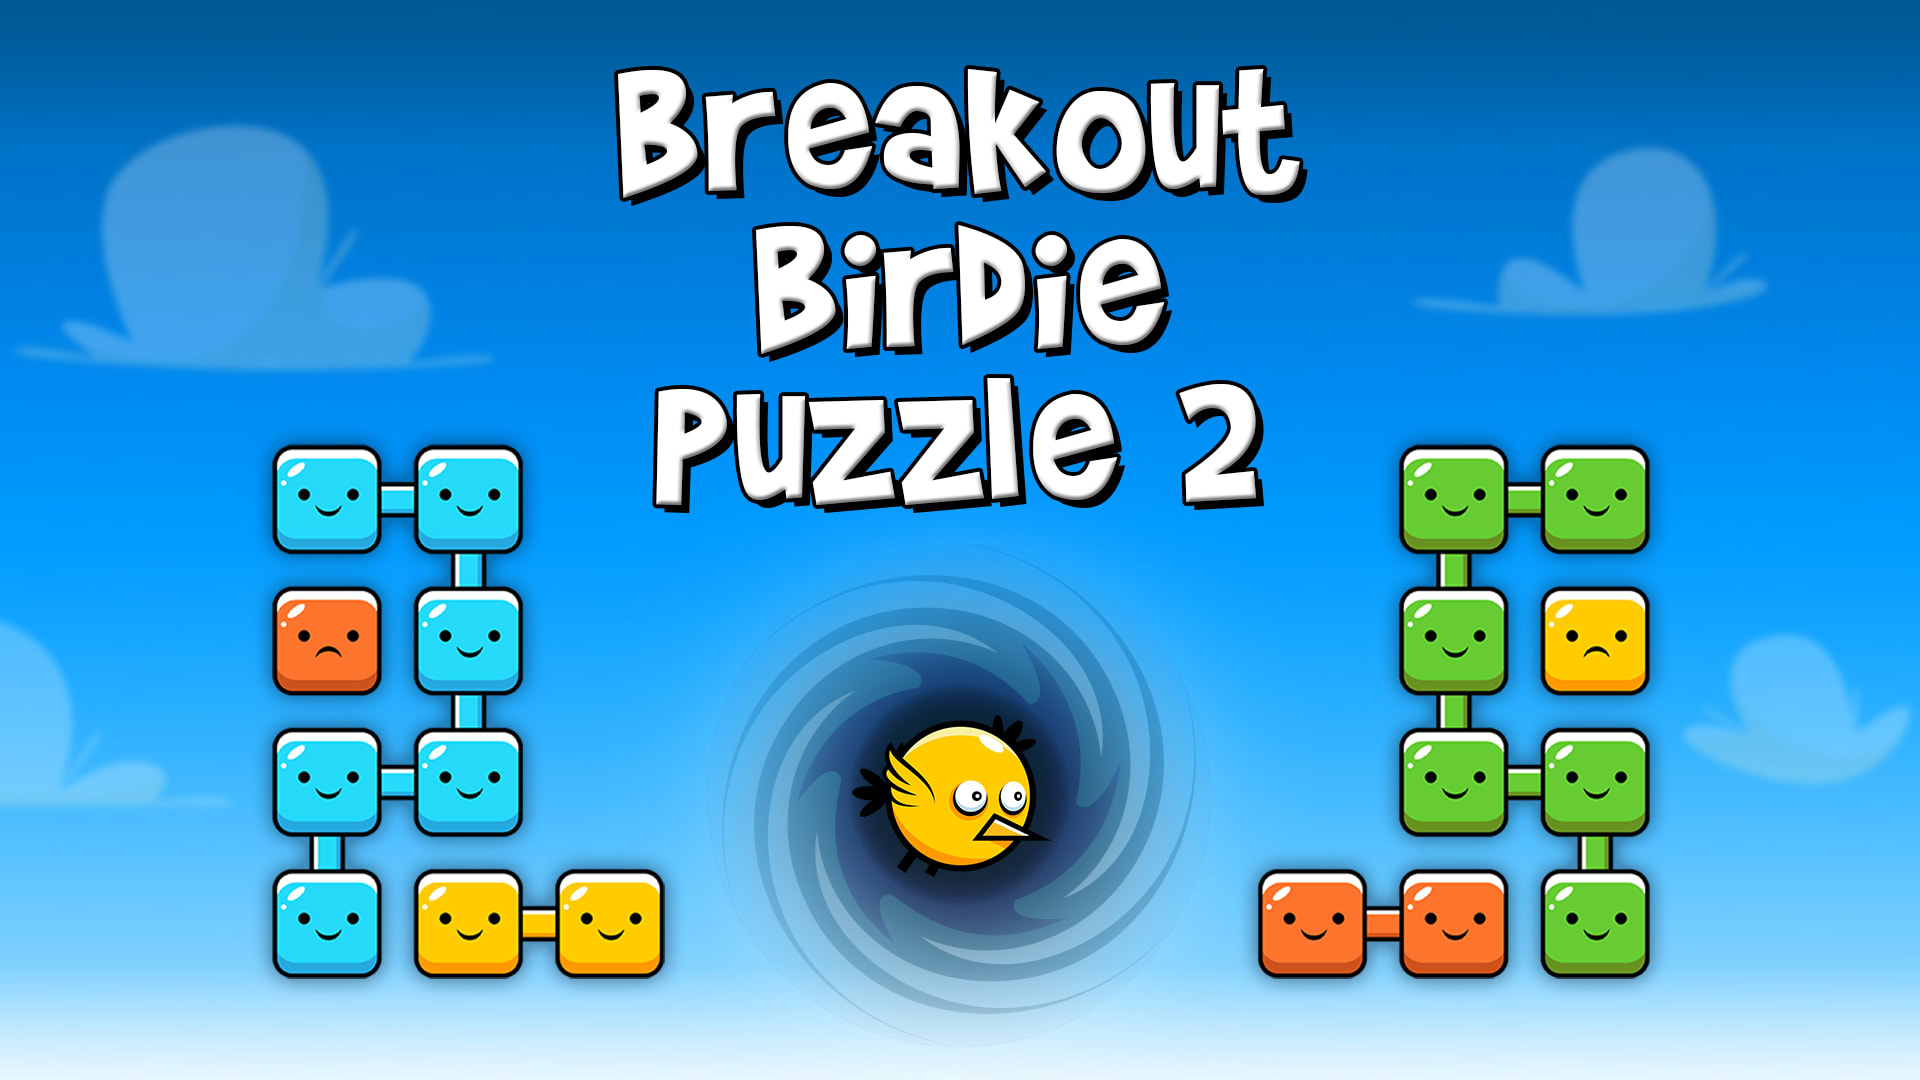 Breakout Birdie Puzzle 2